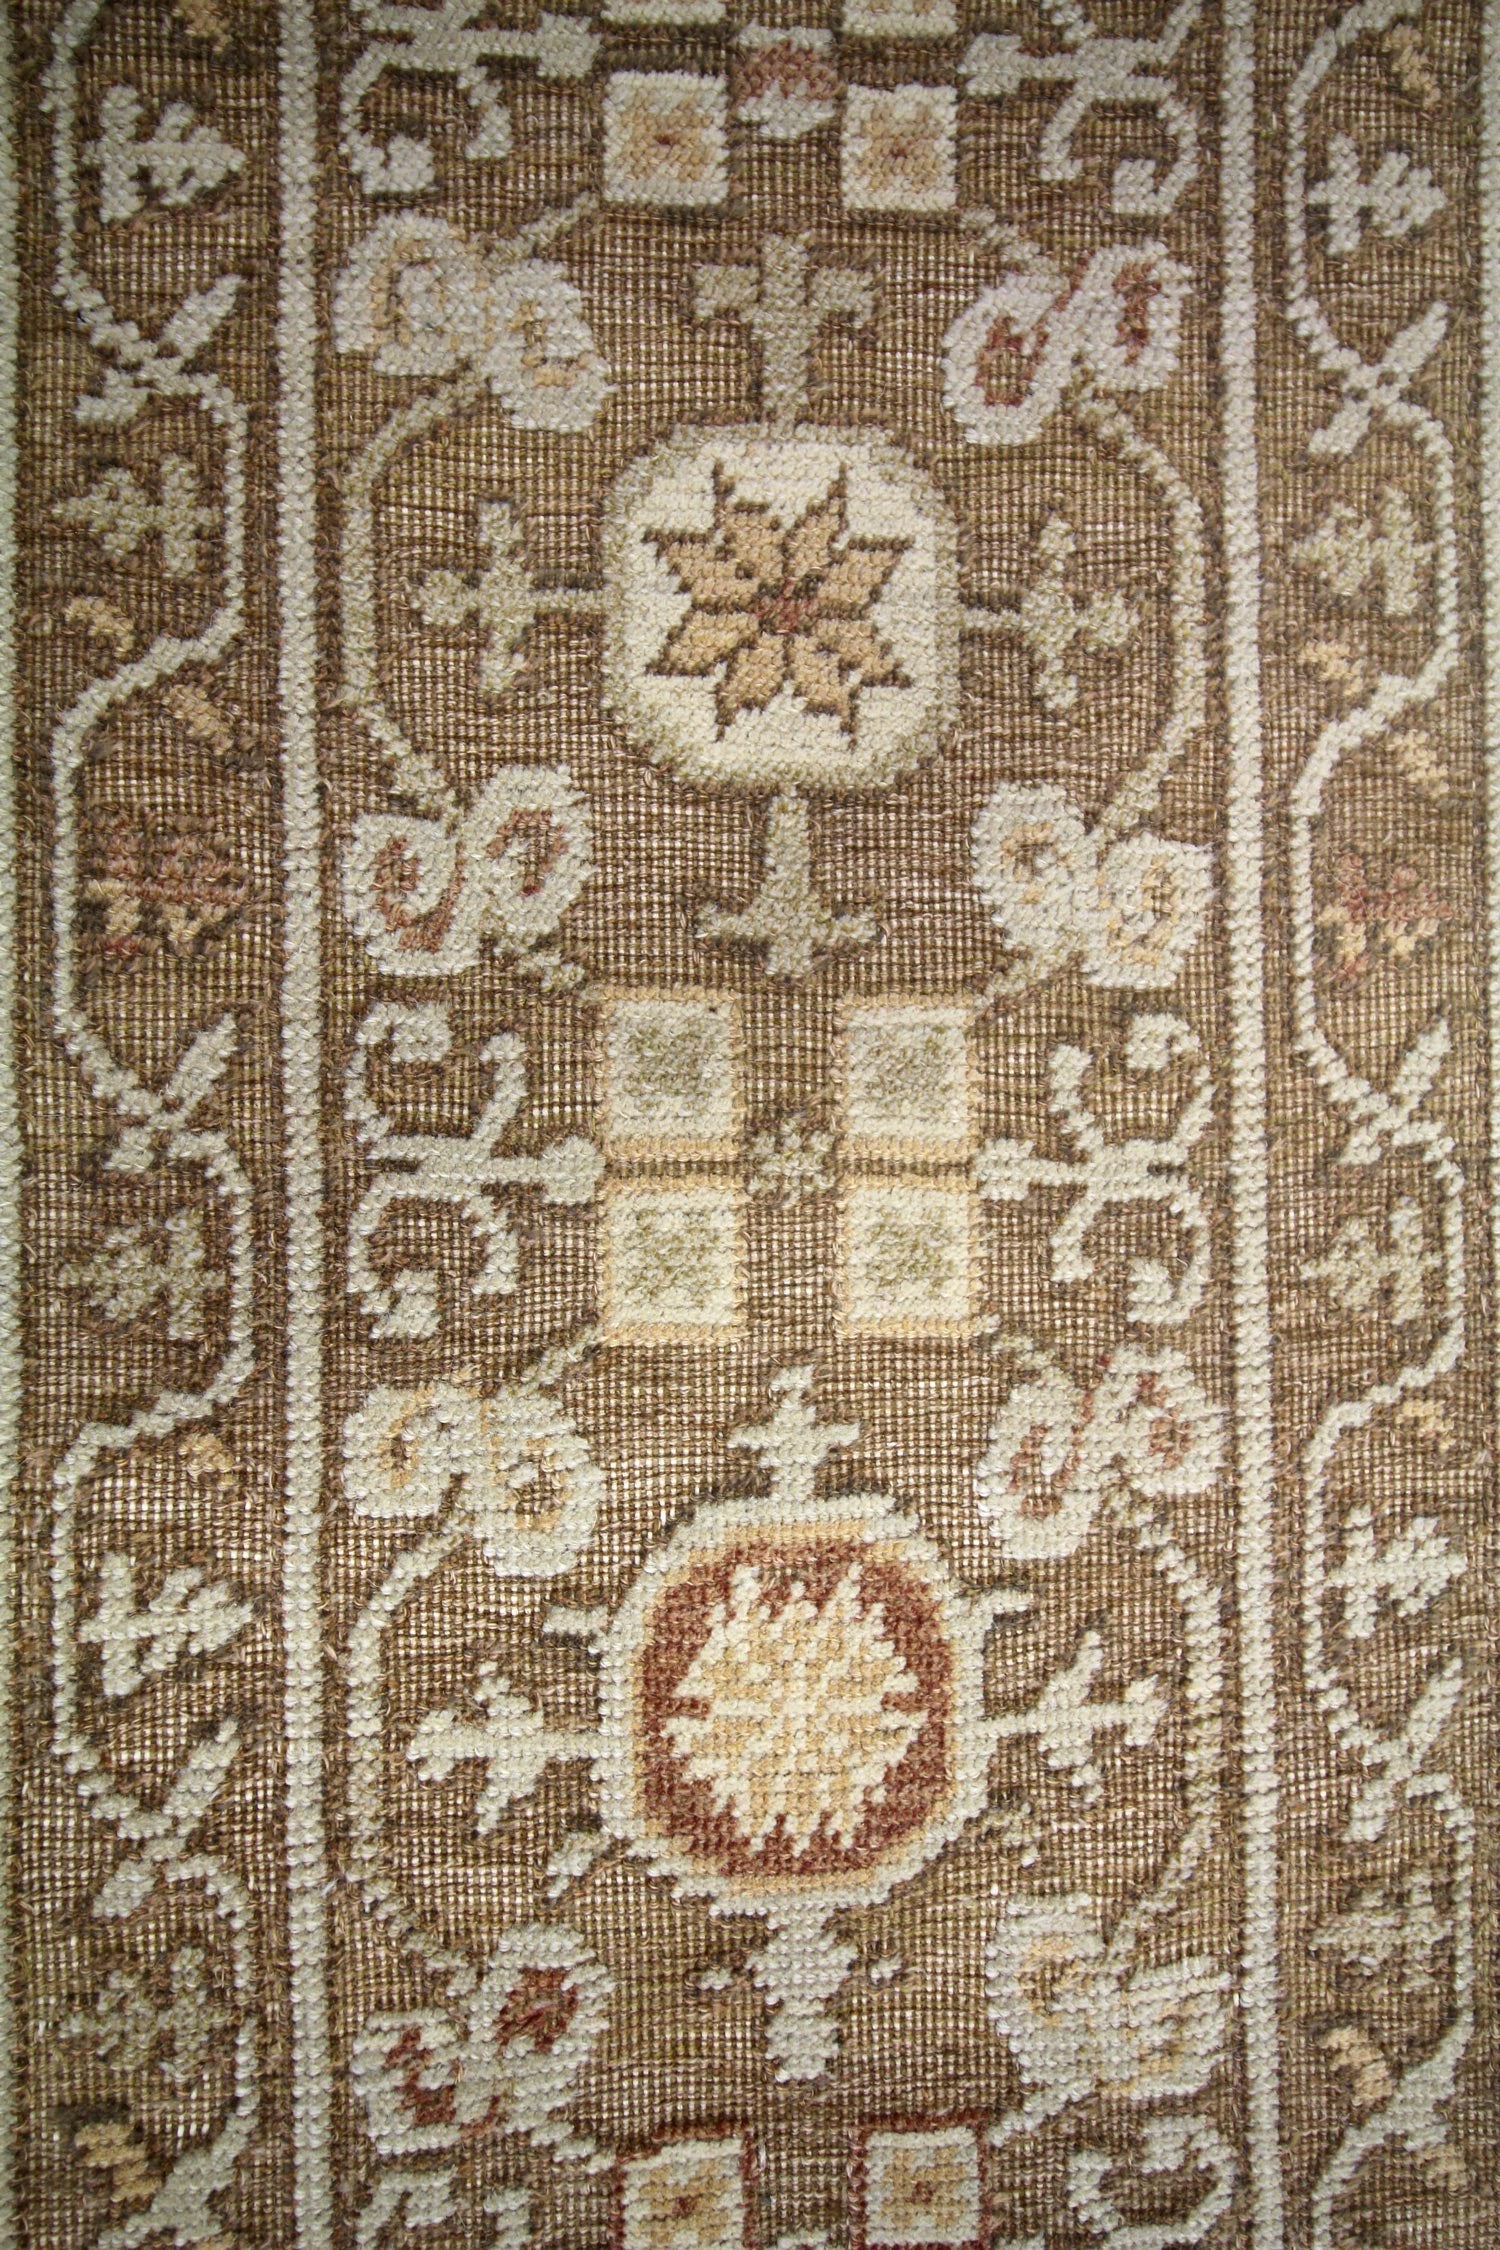 Spanish Cuenca Handwoven Traditional Rug, J63353